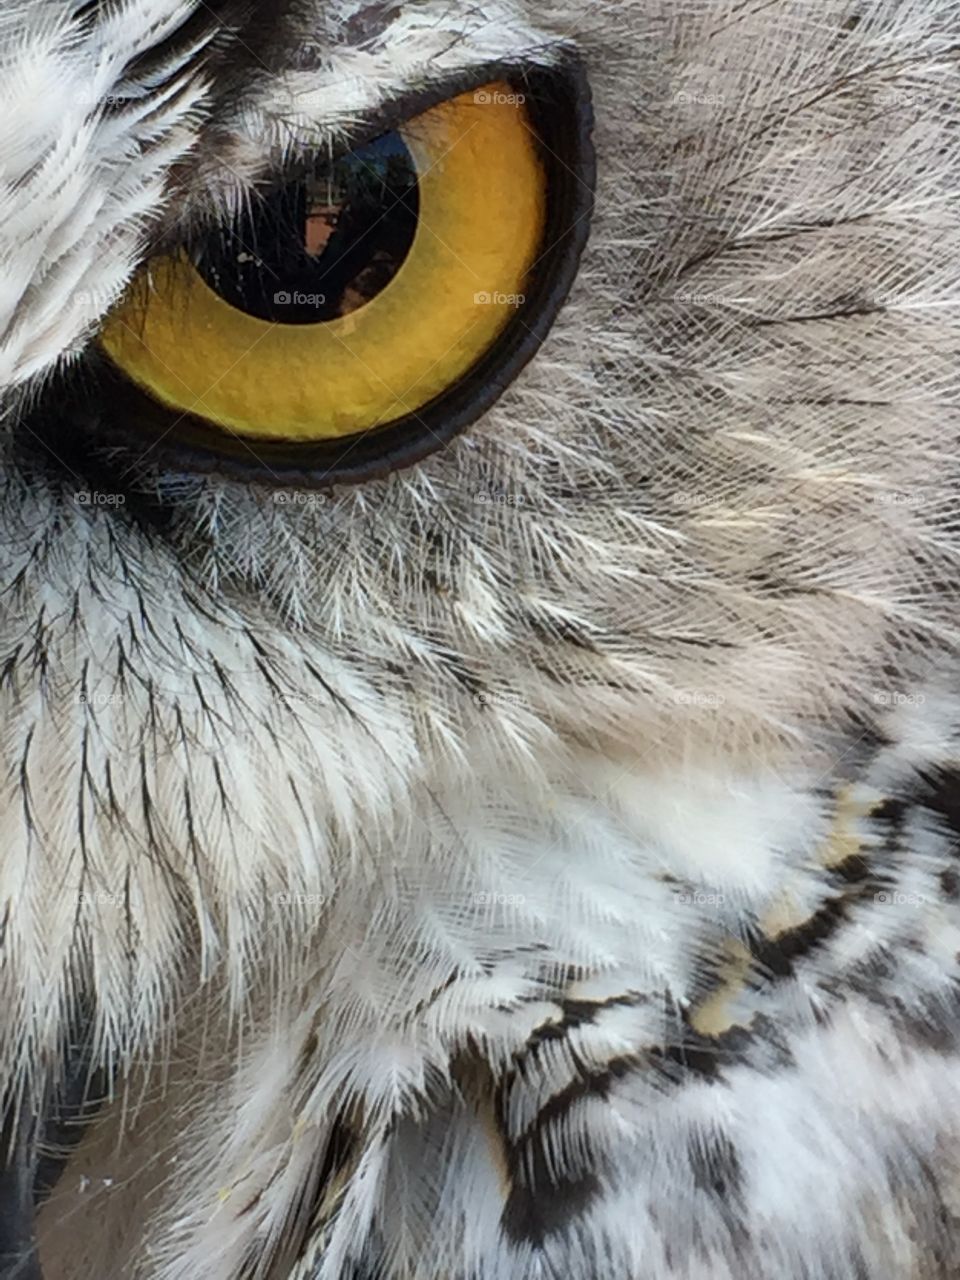 Owl see